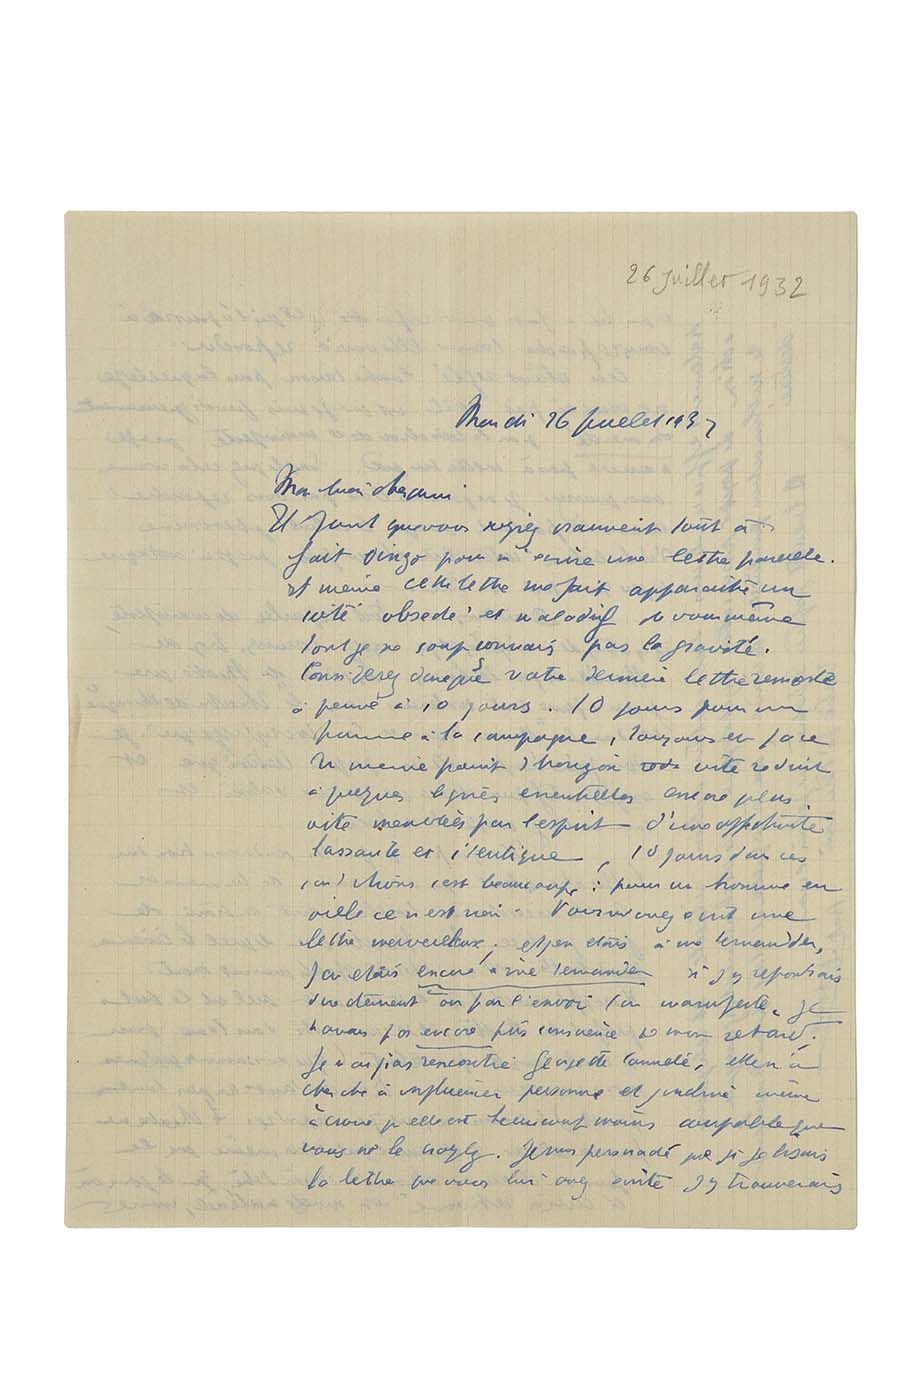 L.A.S. Ant. Artaud, [Paris] July 26, 1932, to André RO…